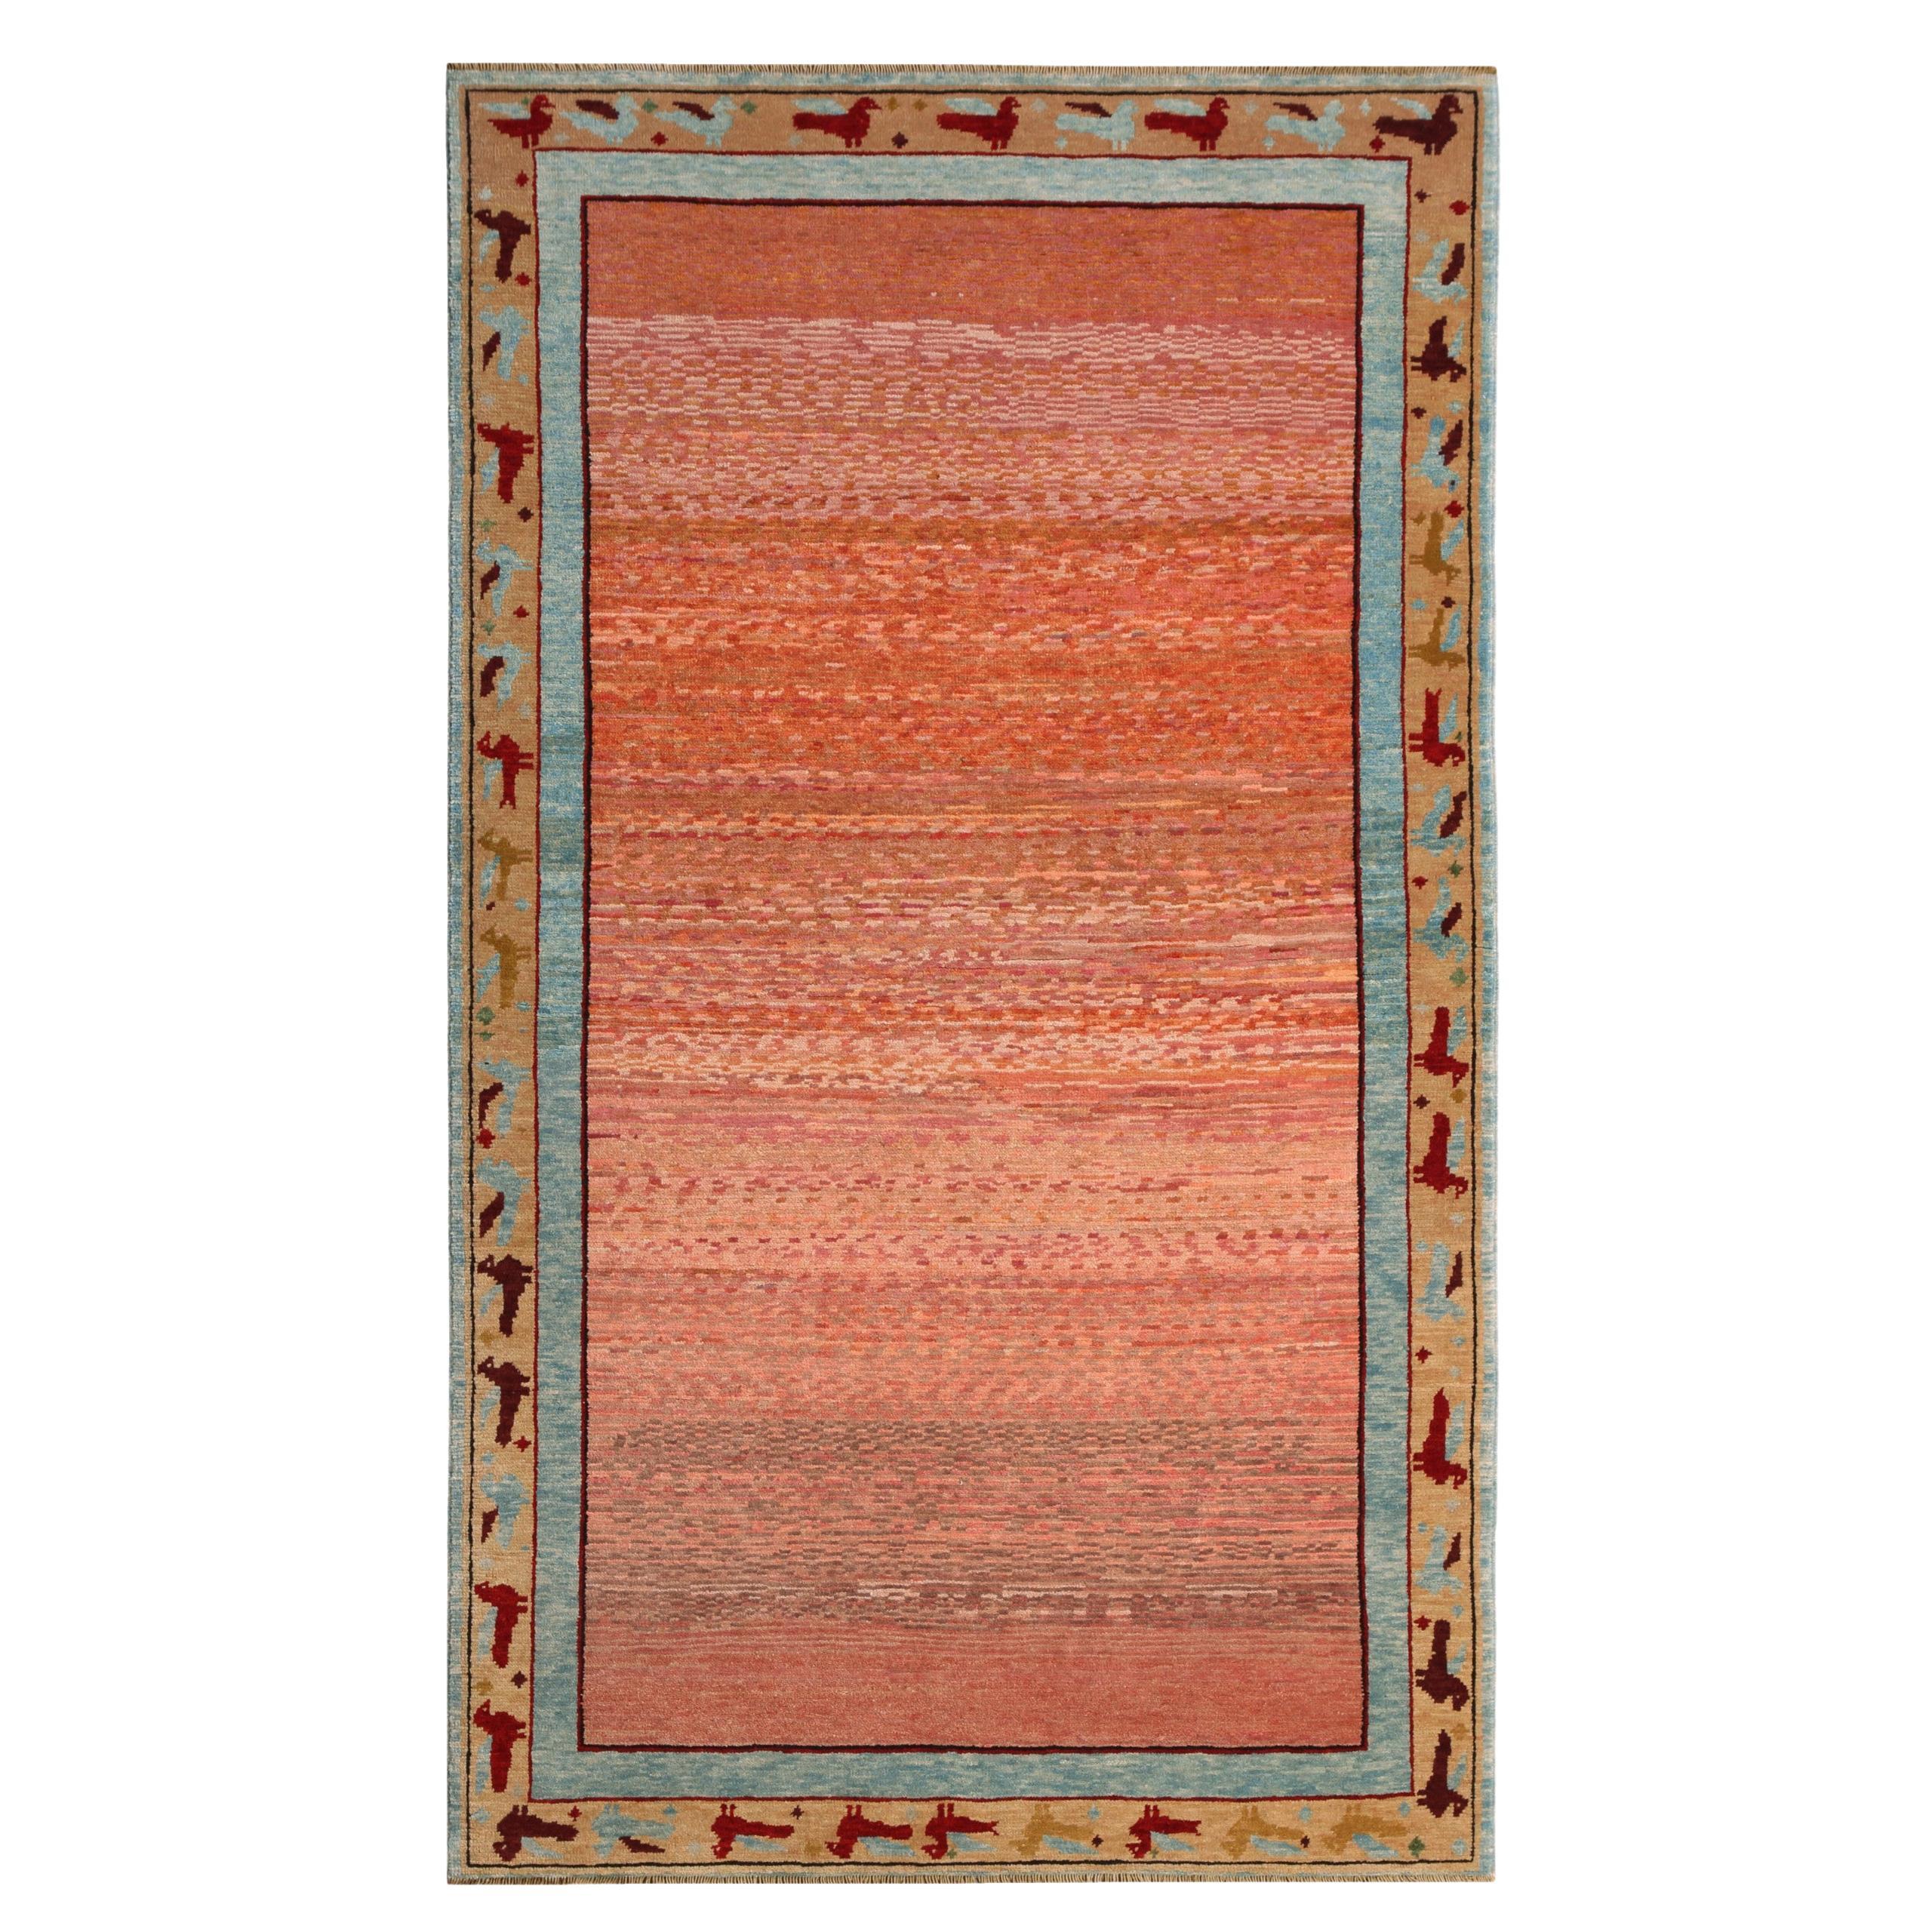 Ararat Rugs the Soft Pink Color Rug, Modern Carpet, Natural Dyed